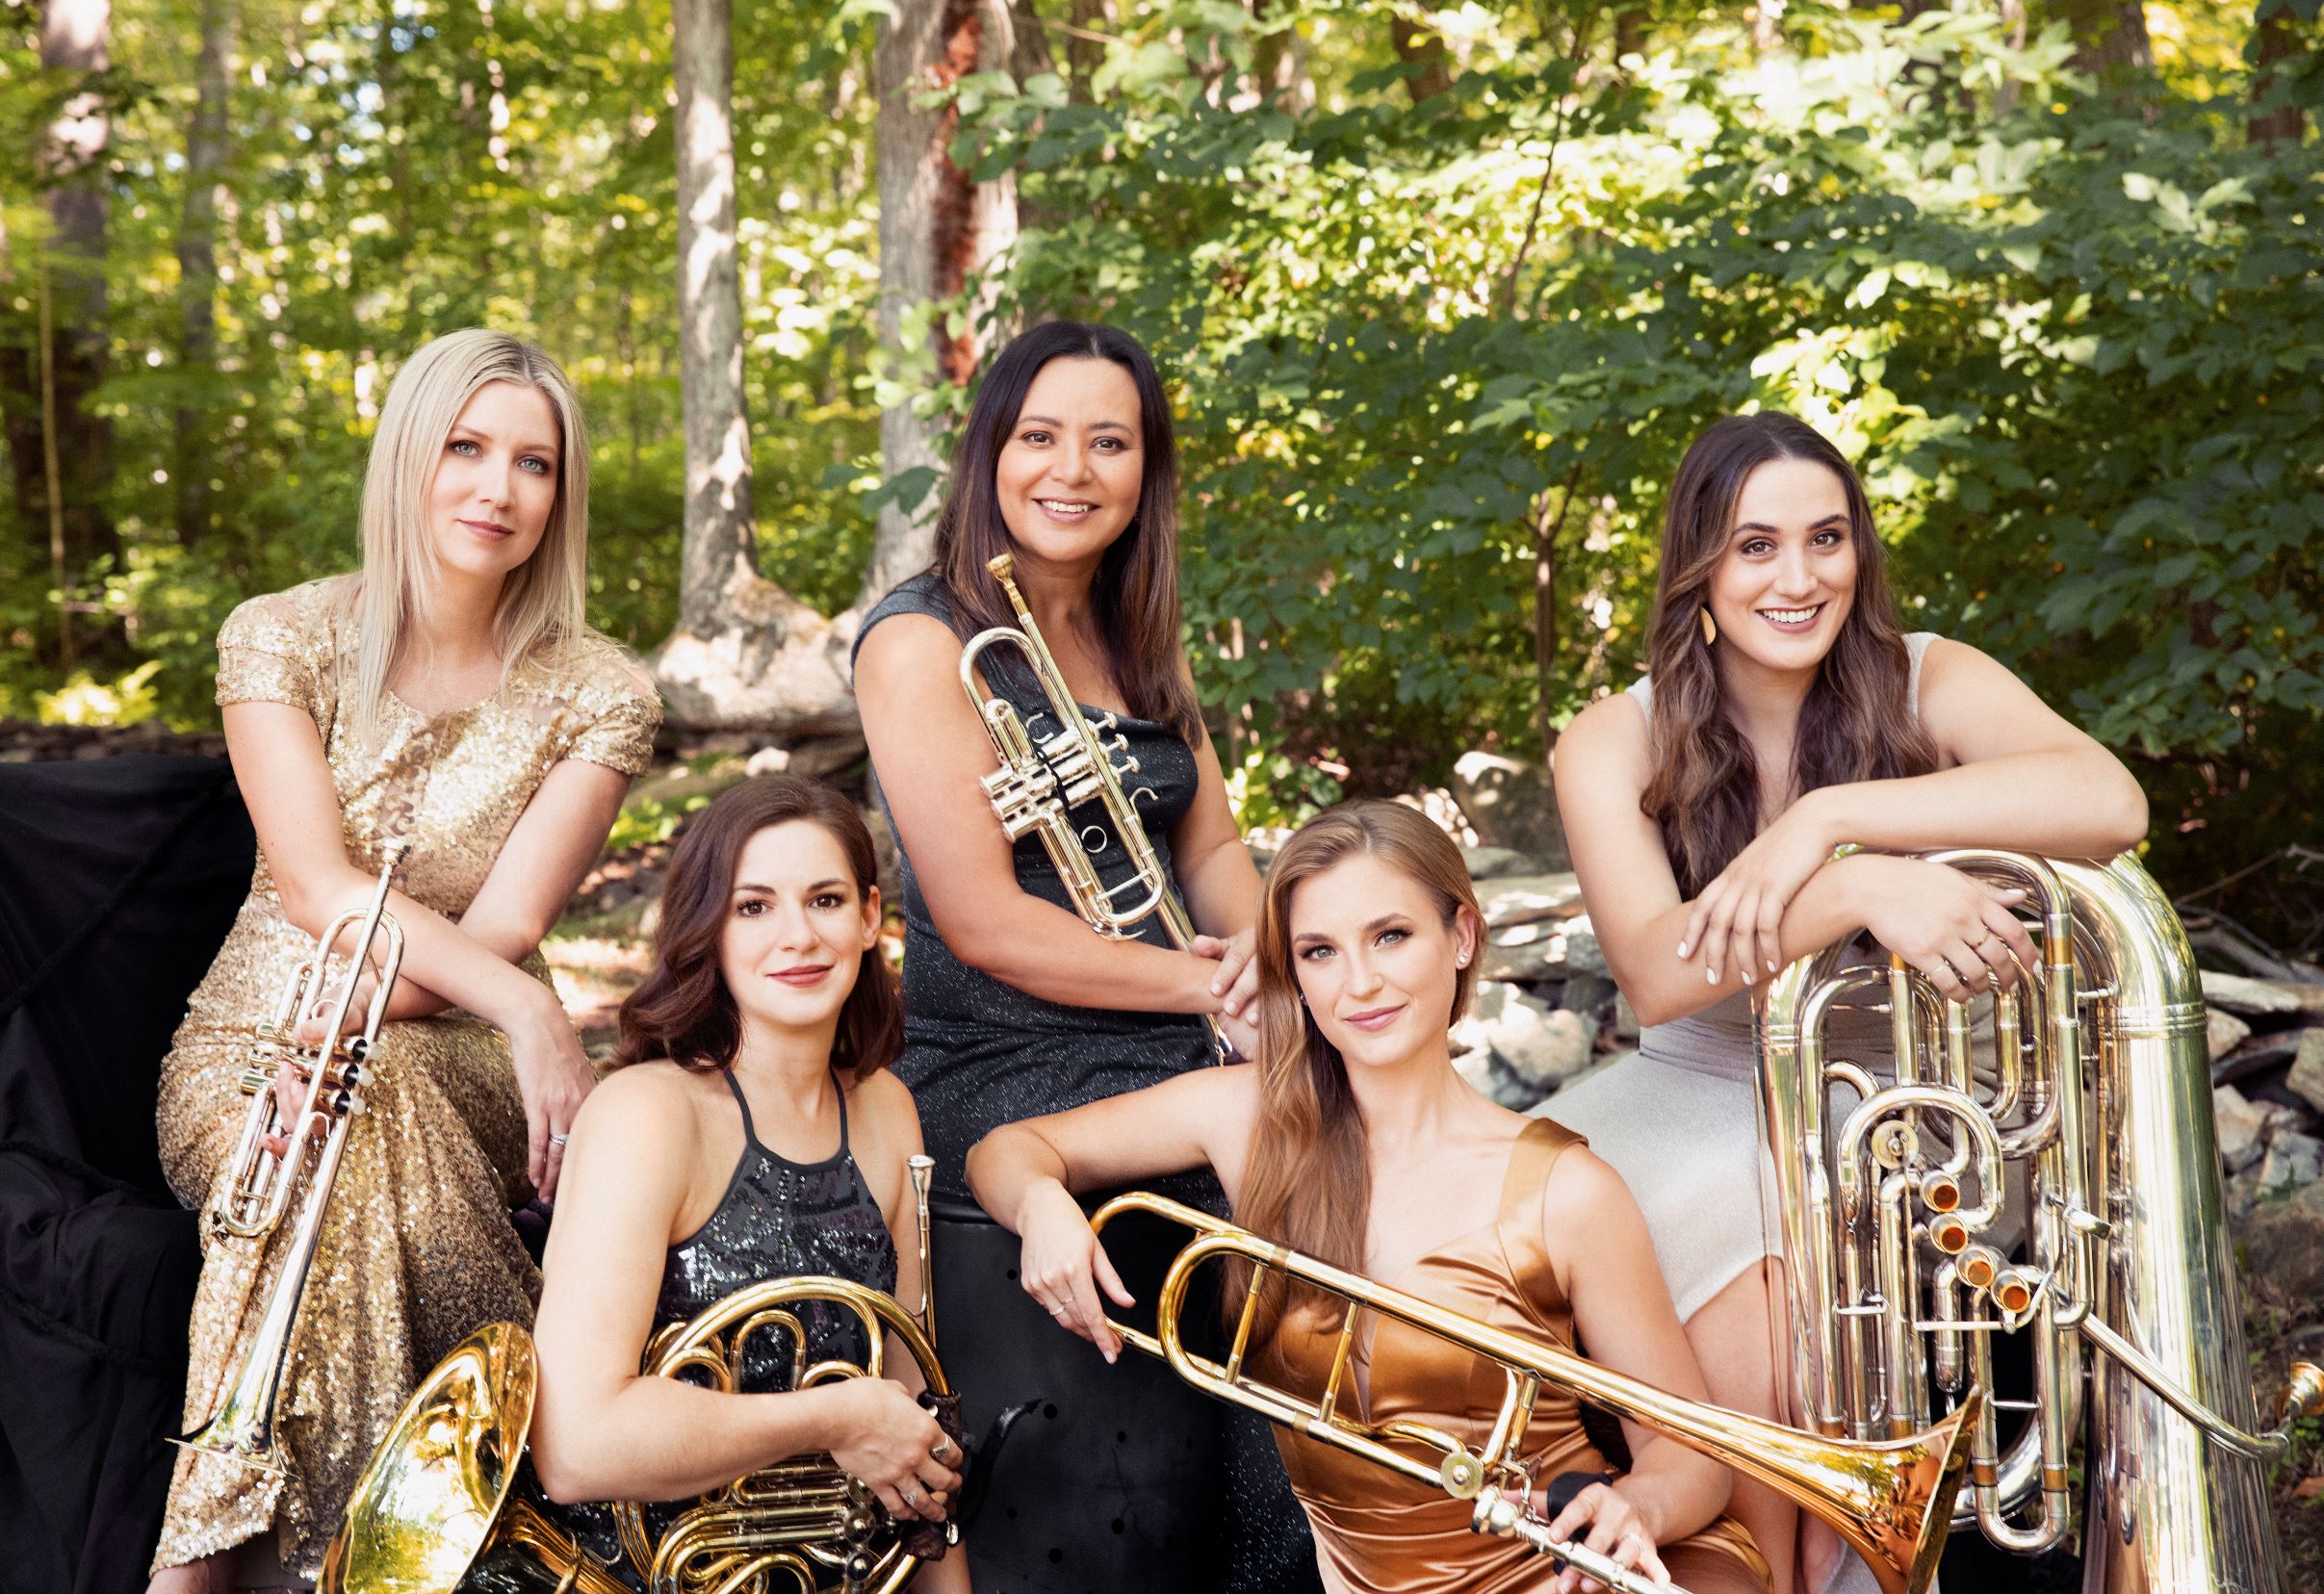 SFA's University Series to feature Seraph Brass Quintet